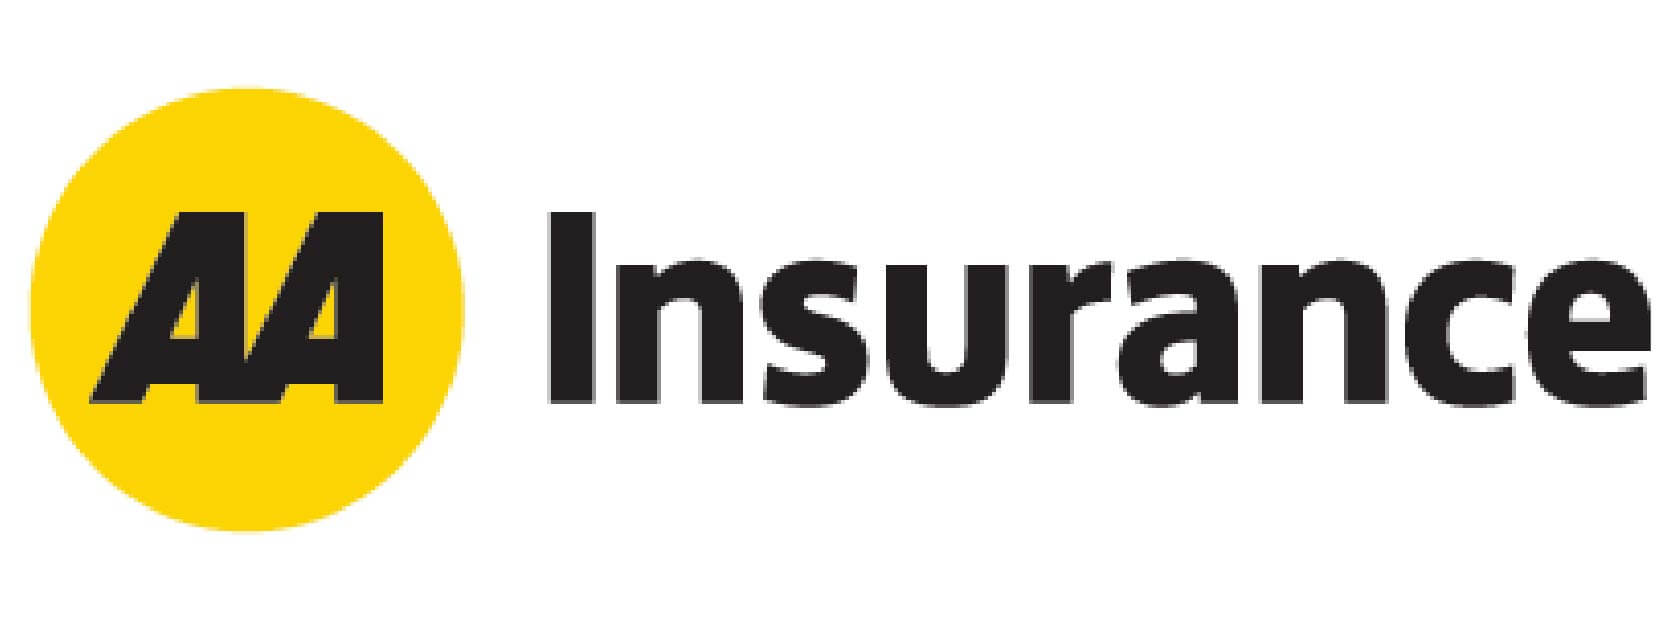 AA Insurance